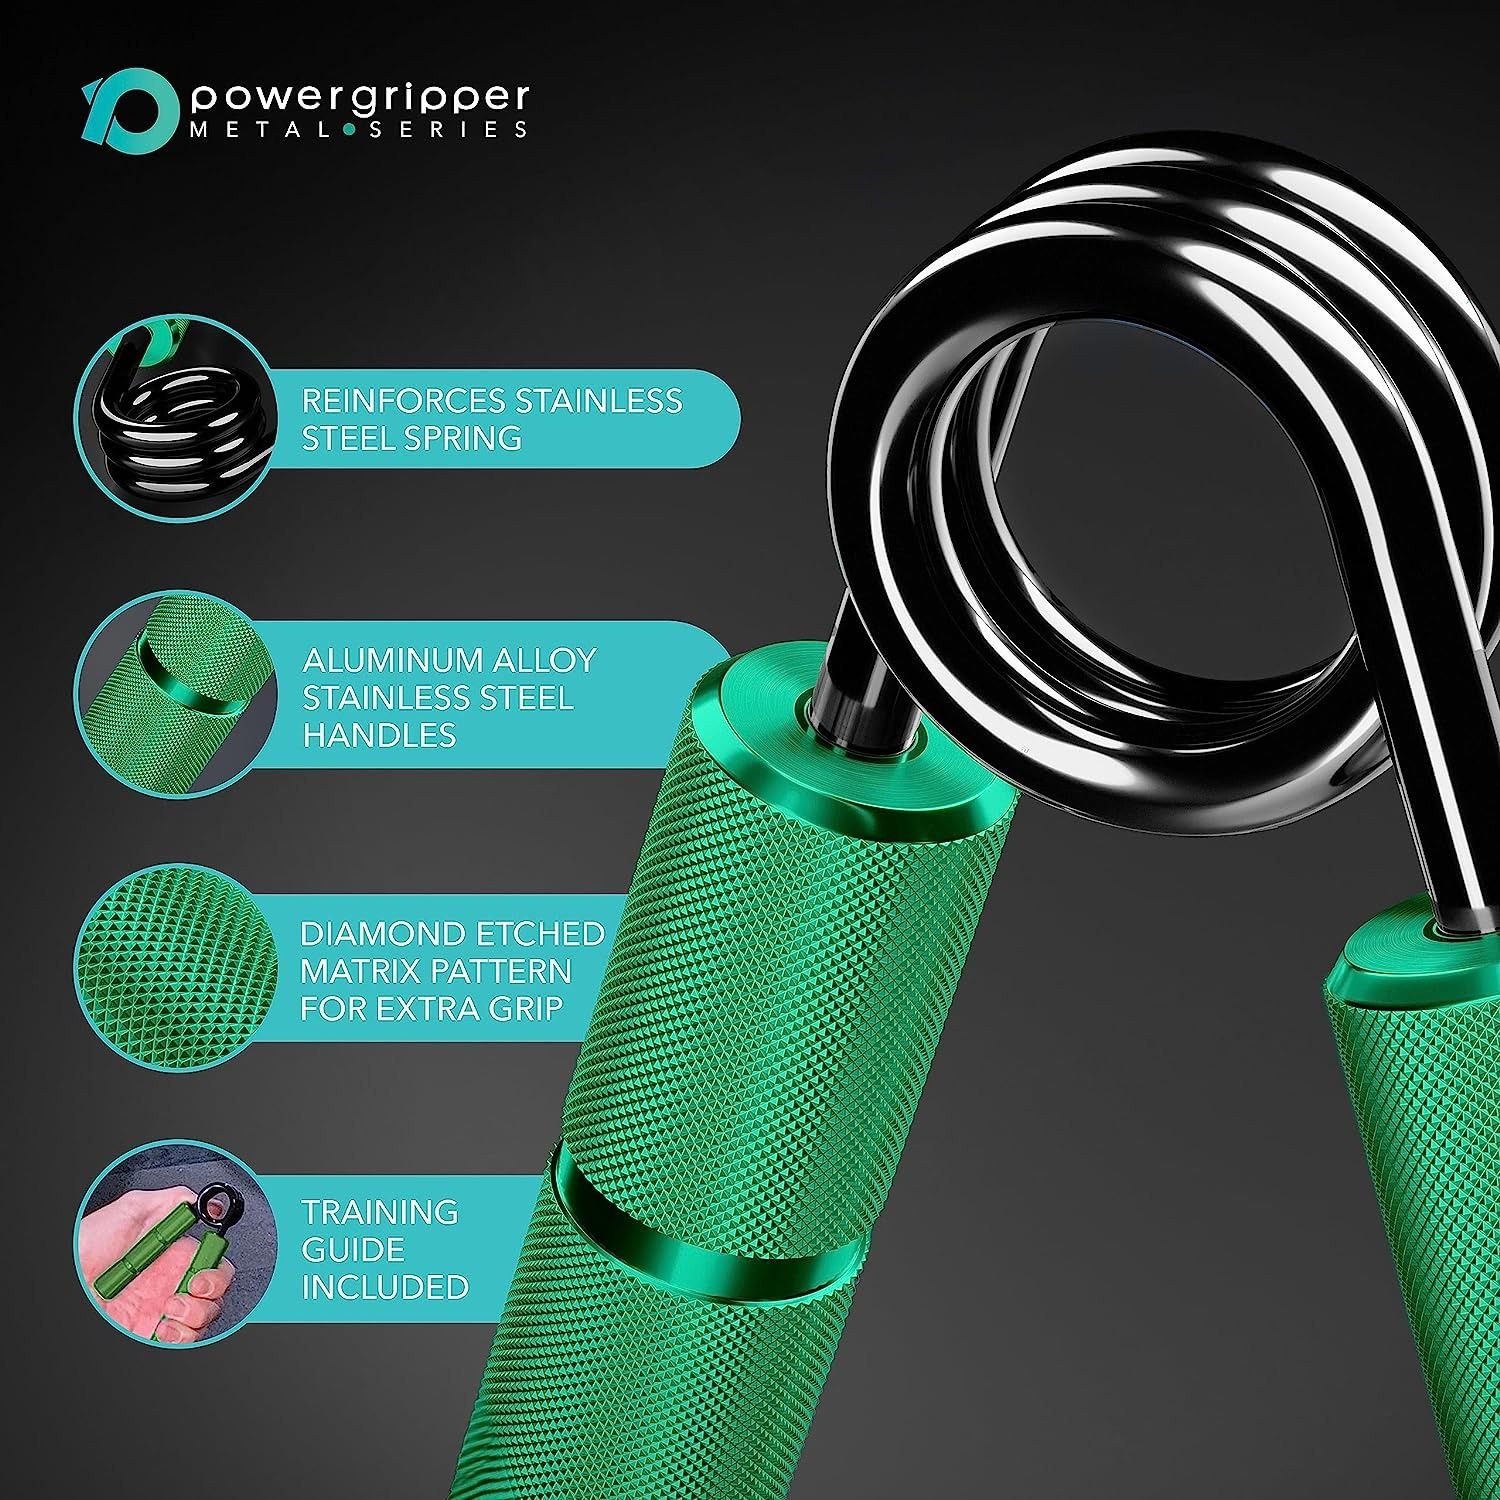 Еспандер Powerball Grip Strengthener – Metal Series “Халк” 181кг (400lbs)